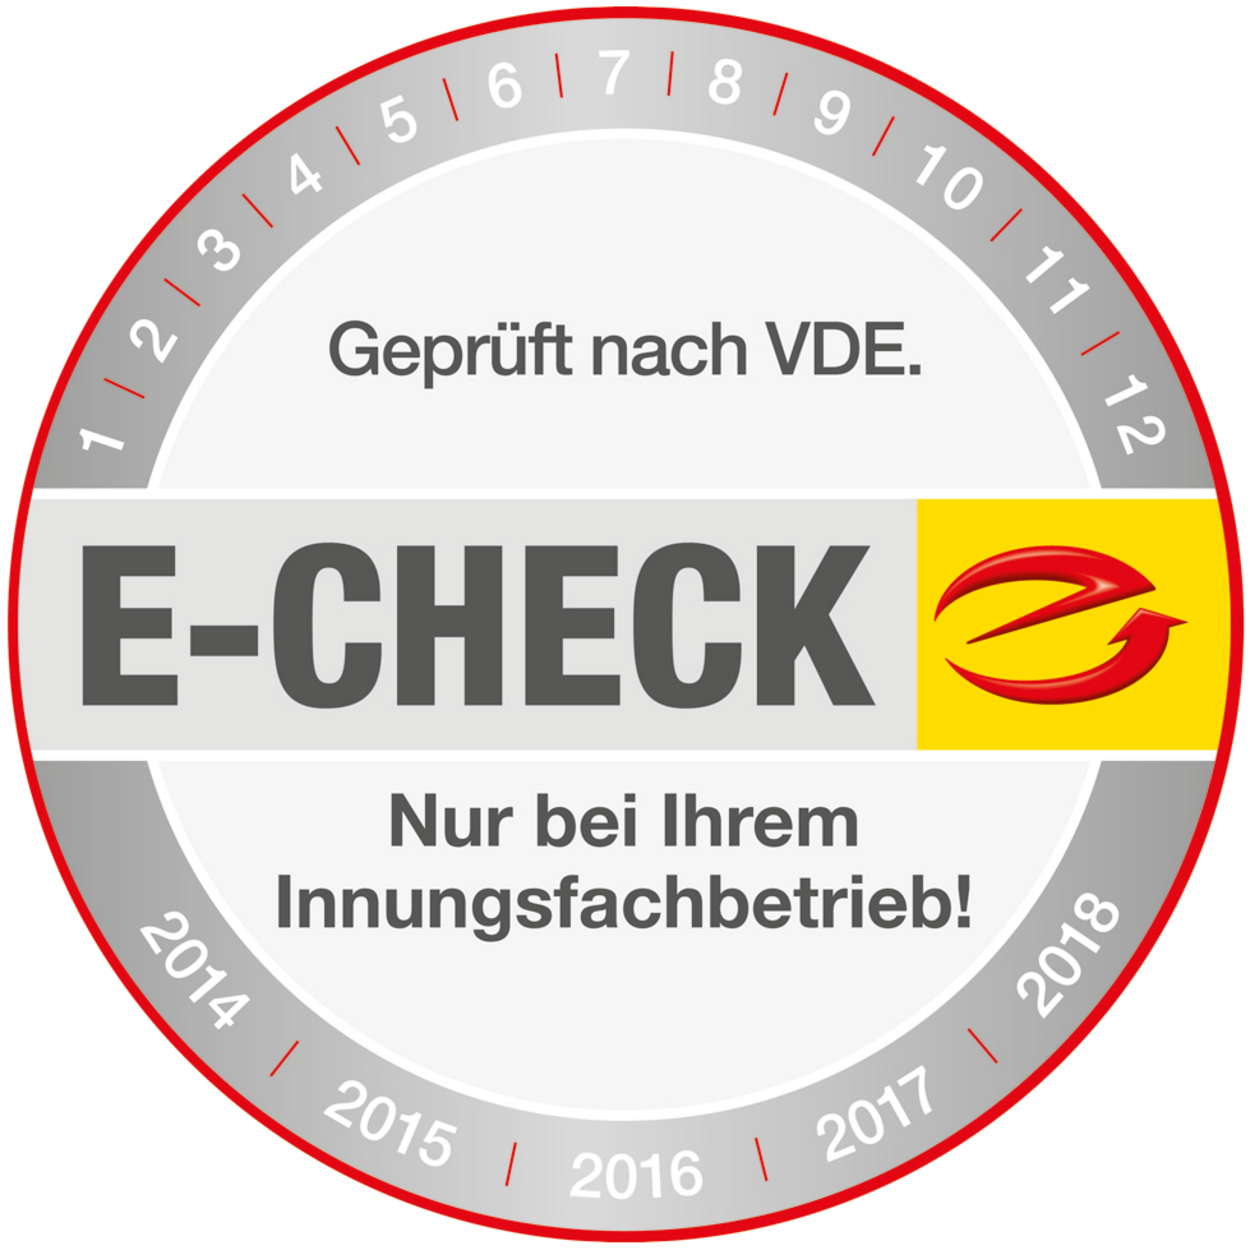 Der E-Check bei Elektro Melk in Sinntal - Sterbfritz